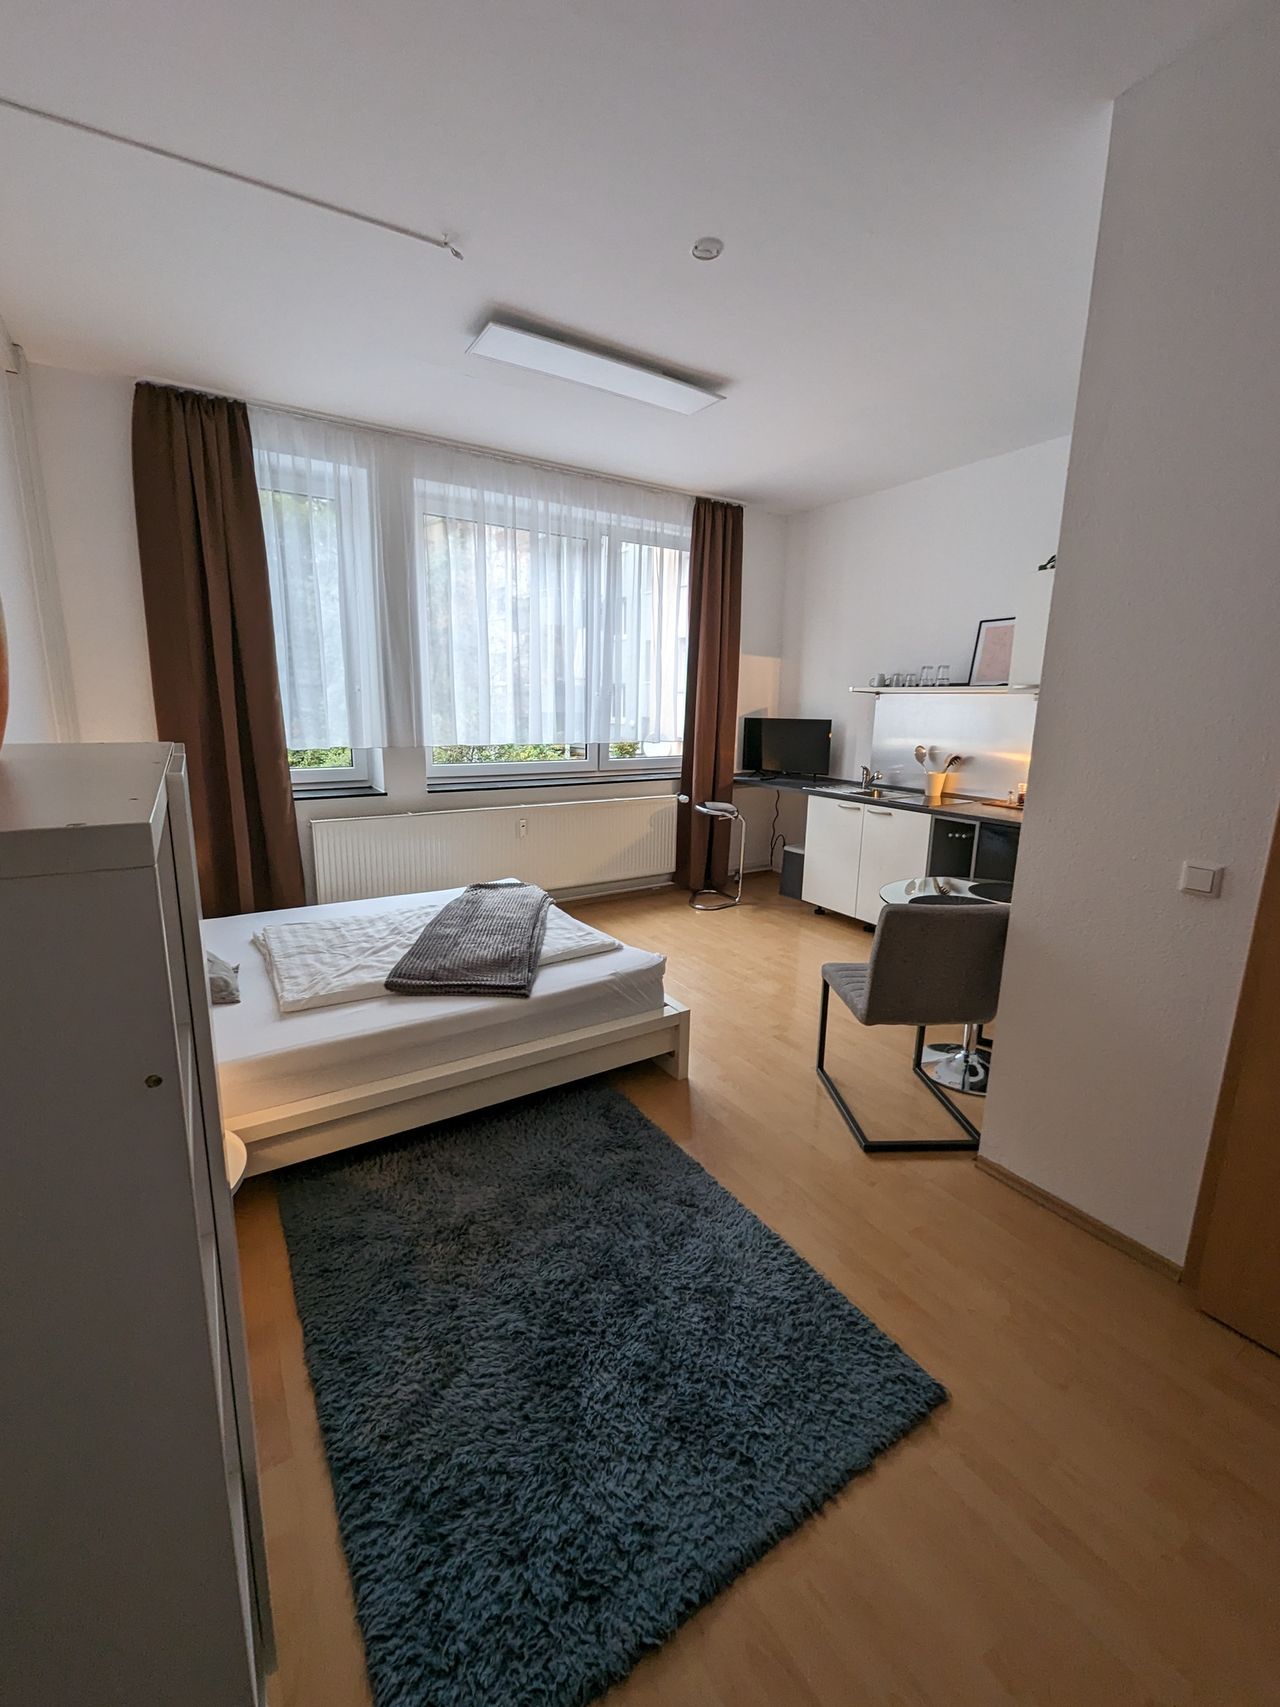 Nice & modern apartment in Pforzheim